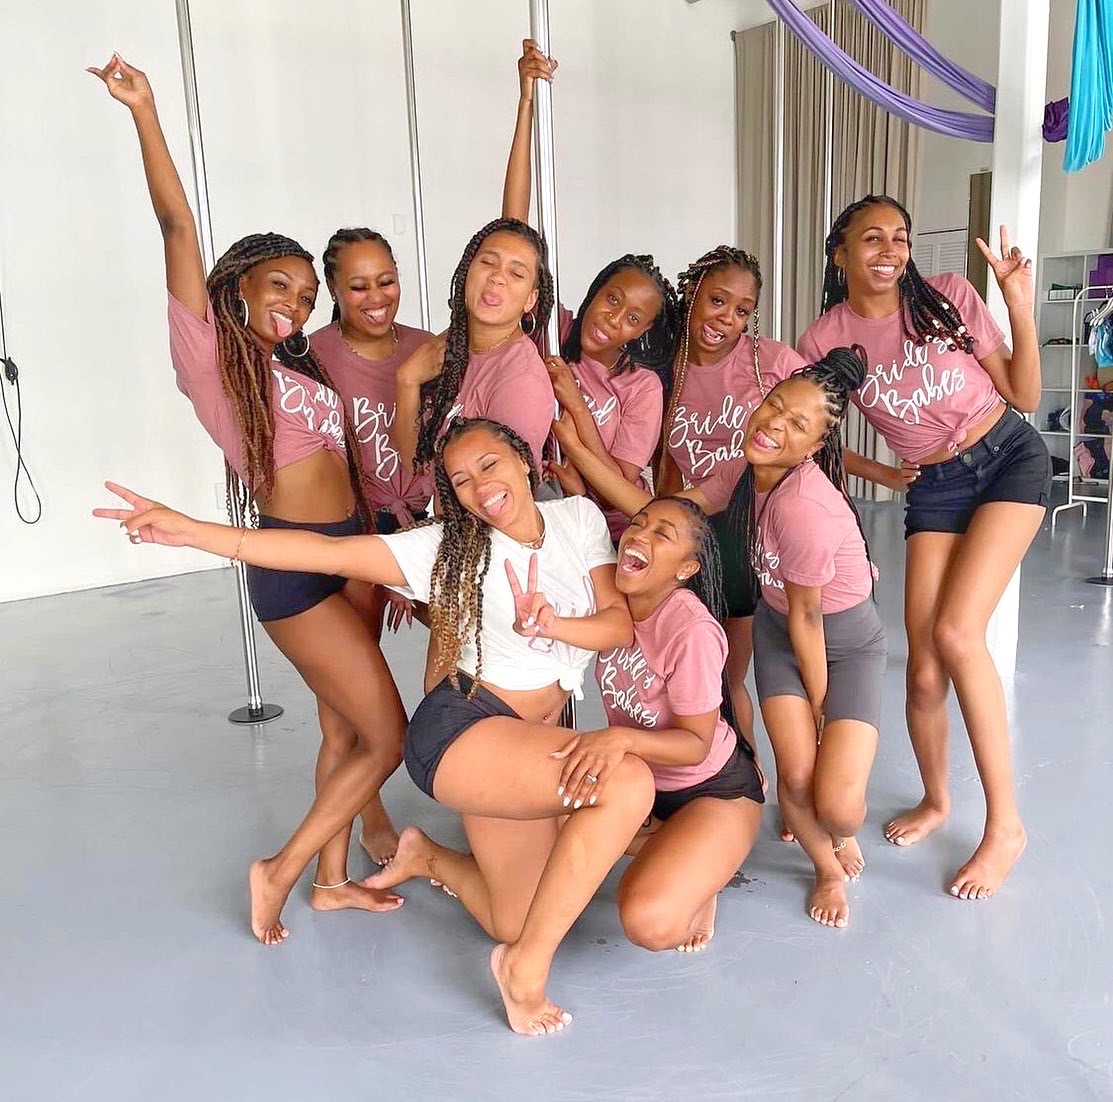 Miami Pole Dance Studio: Read Reviews and Book Classes on ClassPass